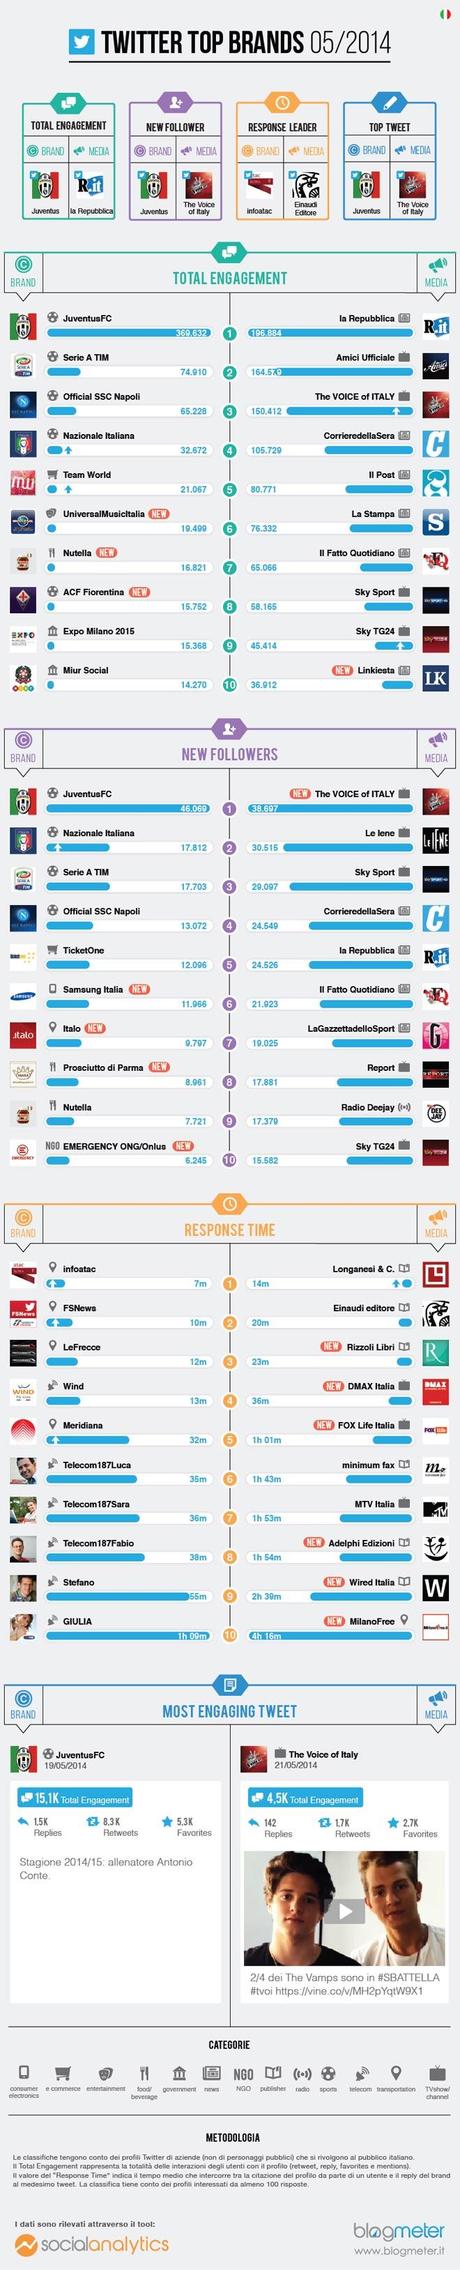 top-brands-twitter-maggio-2014-infografica